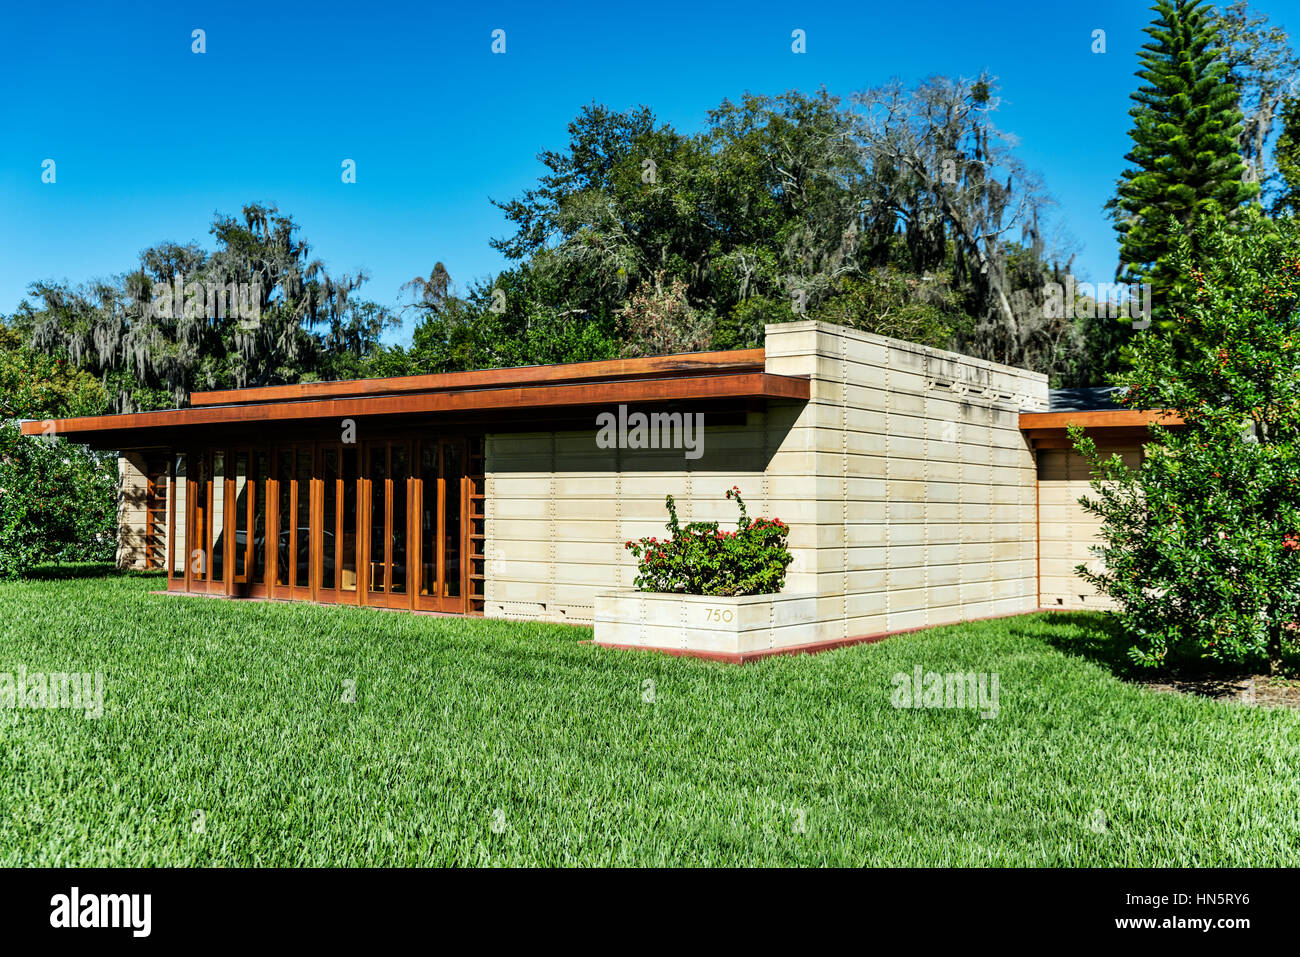 Usonian house progettata da Frank Lloyd Wright per Florida Southern College, Lakeland, Florida, Stati Uniti d'America Foto Stock